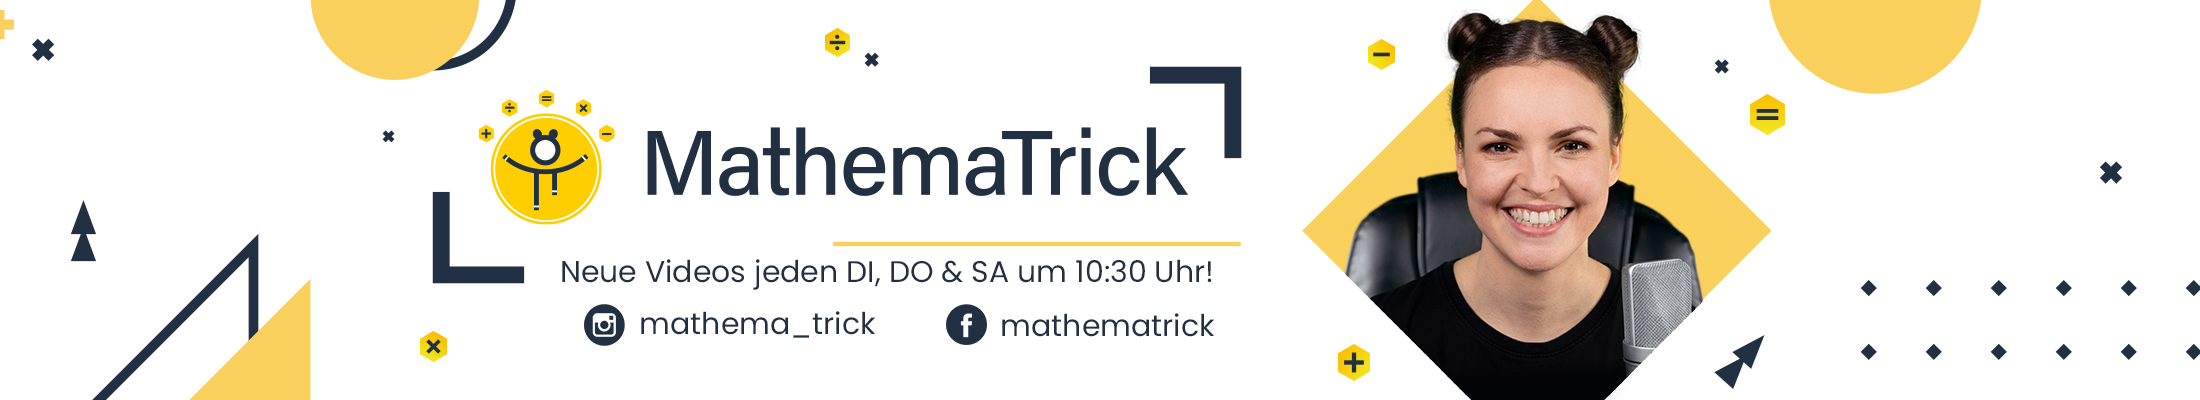 MathemaTrick